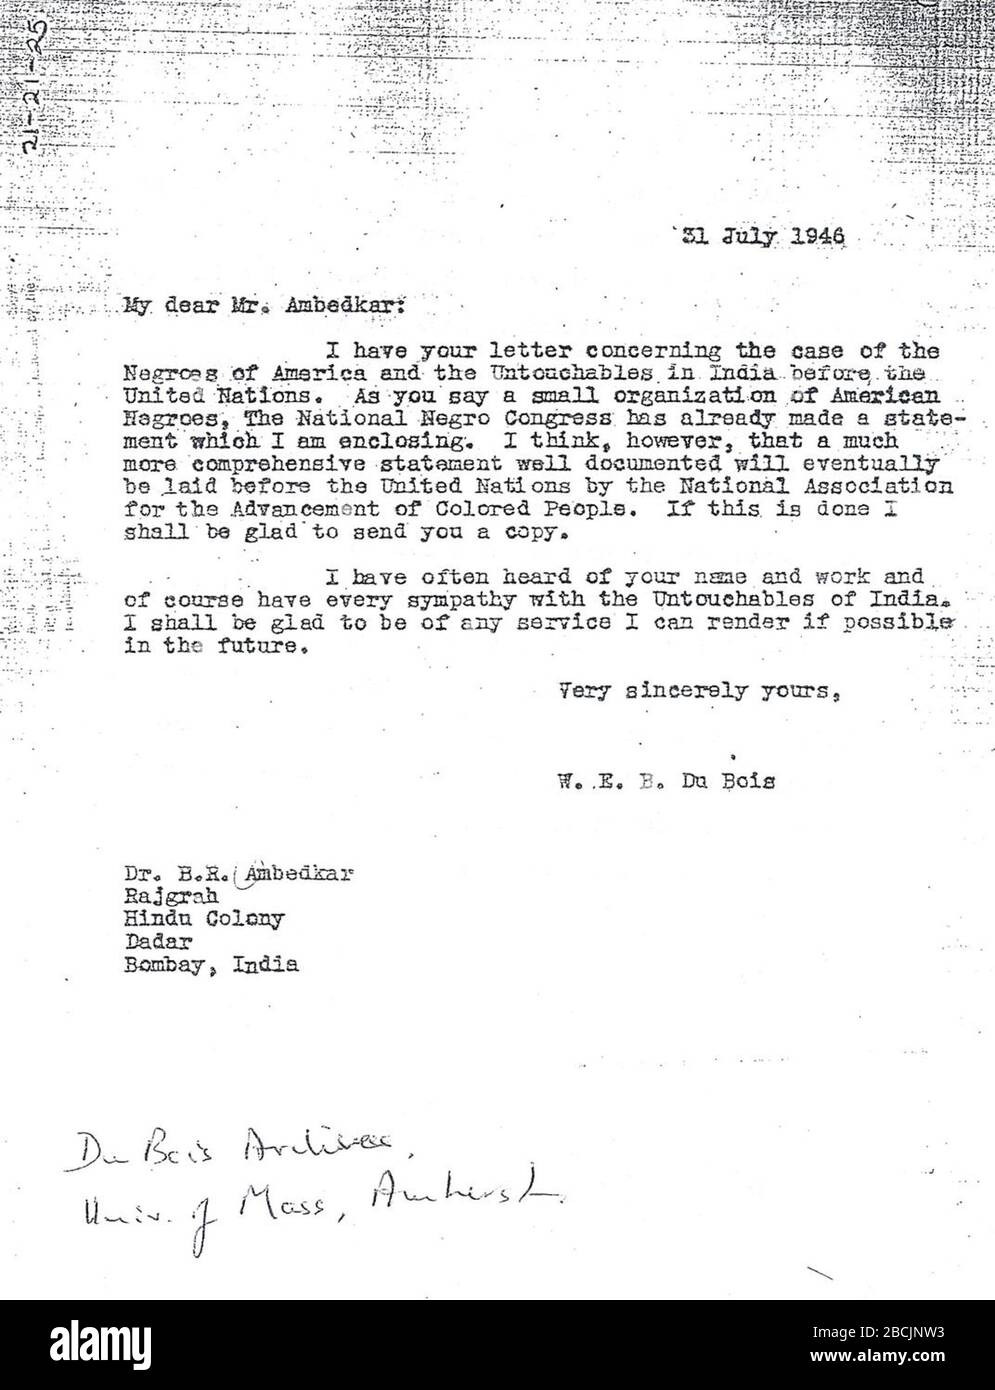 Inglés: Carta de W.E.B. Du Bois a B.R. Ambedkar fechado el 31 de julio de  1946. En la carta, Du Bois responde a la carta de Ambedkar y adjuntó una  declaración hecha